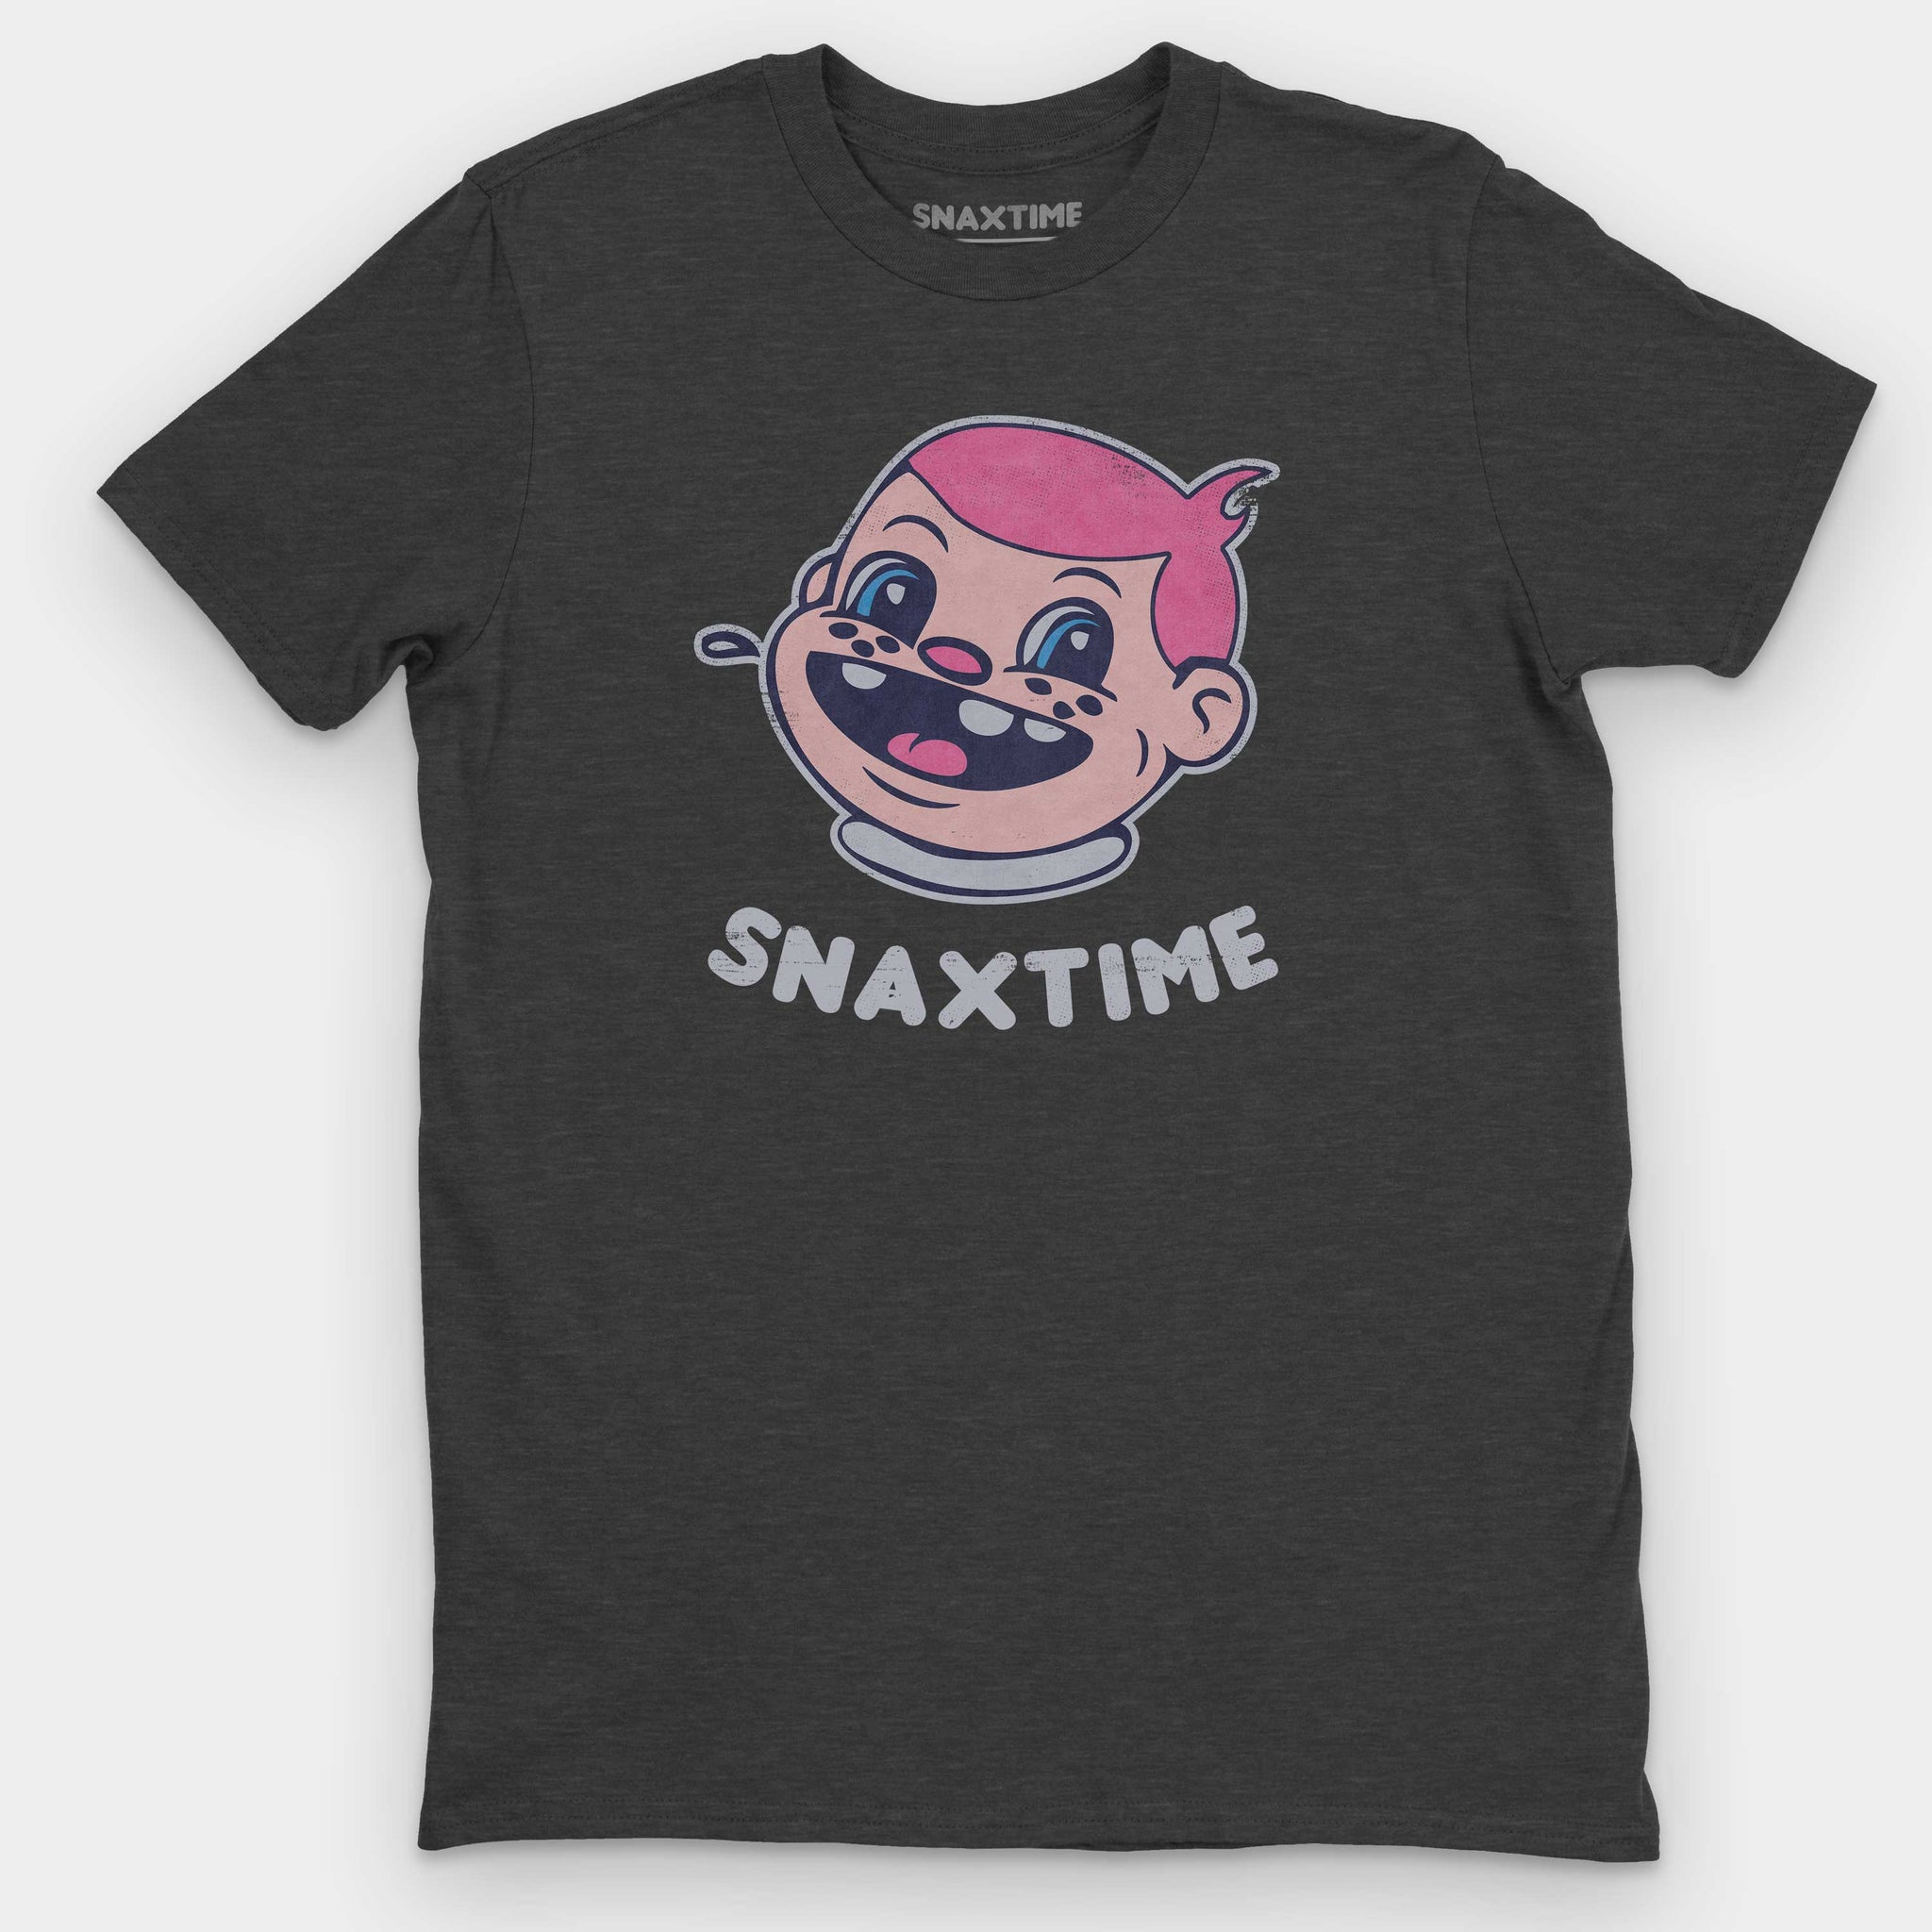 Snaxtime Original Graphic T-Shirt